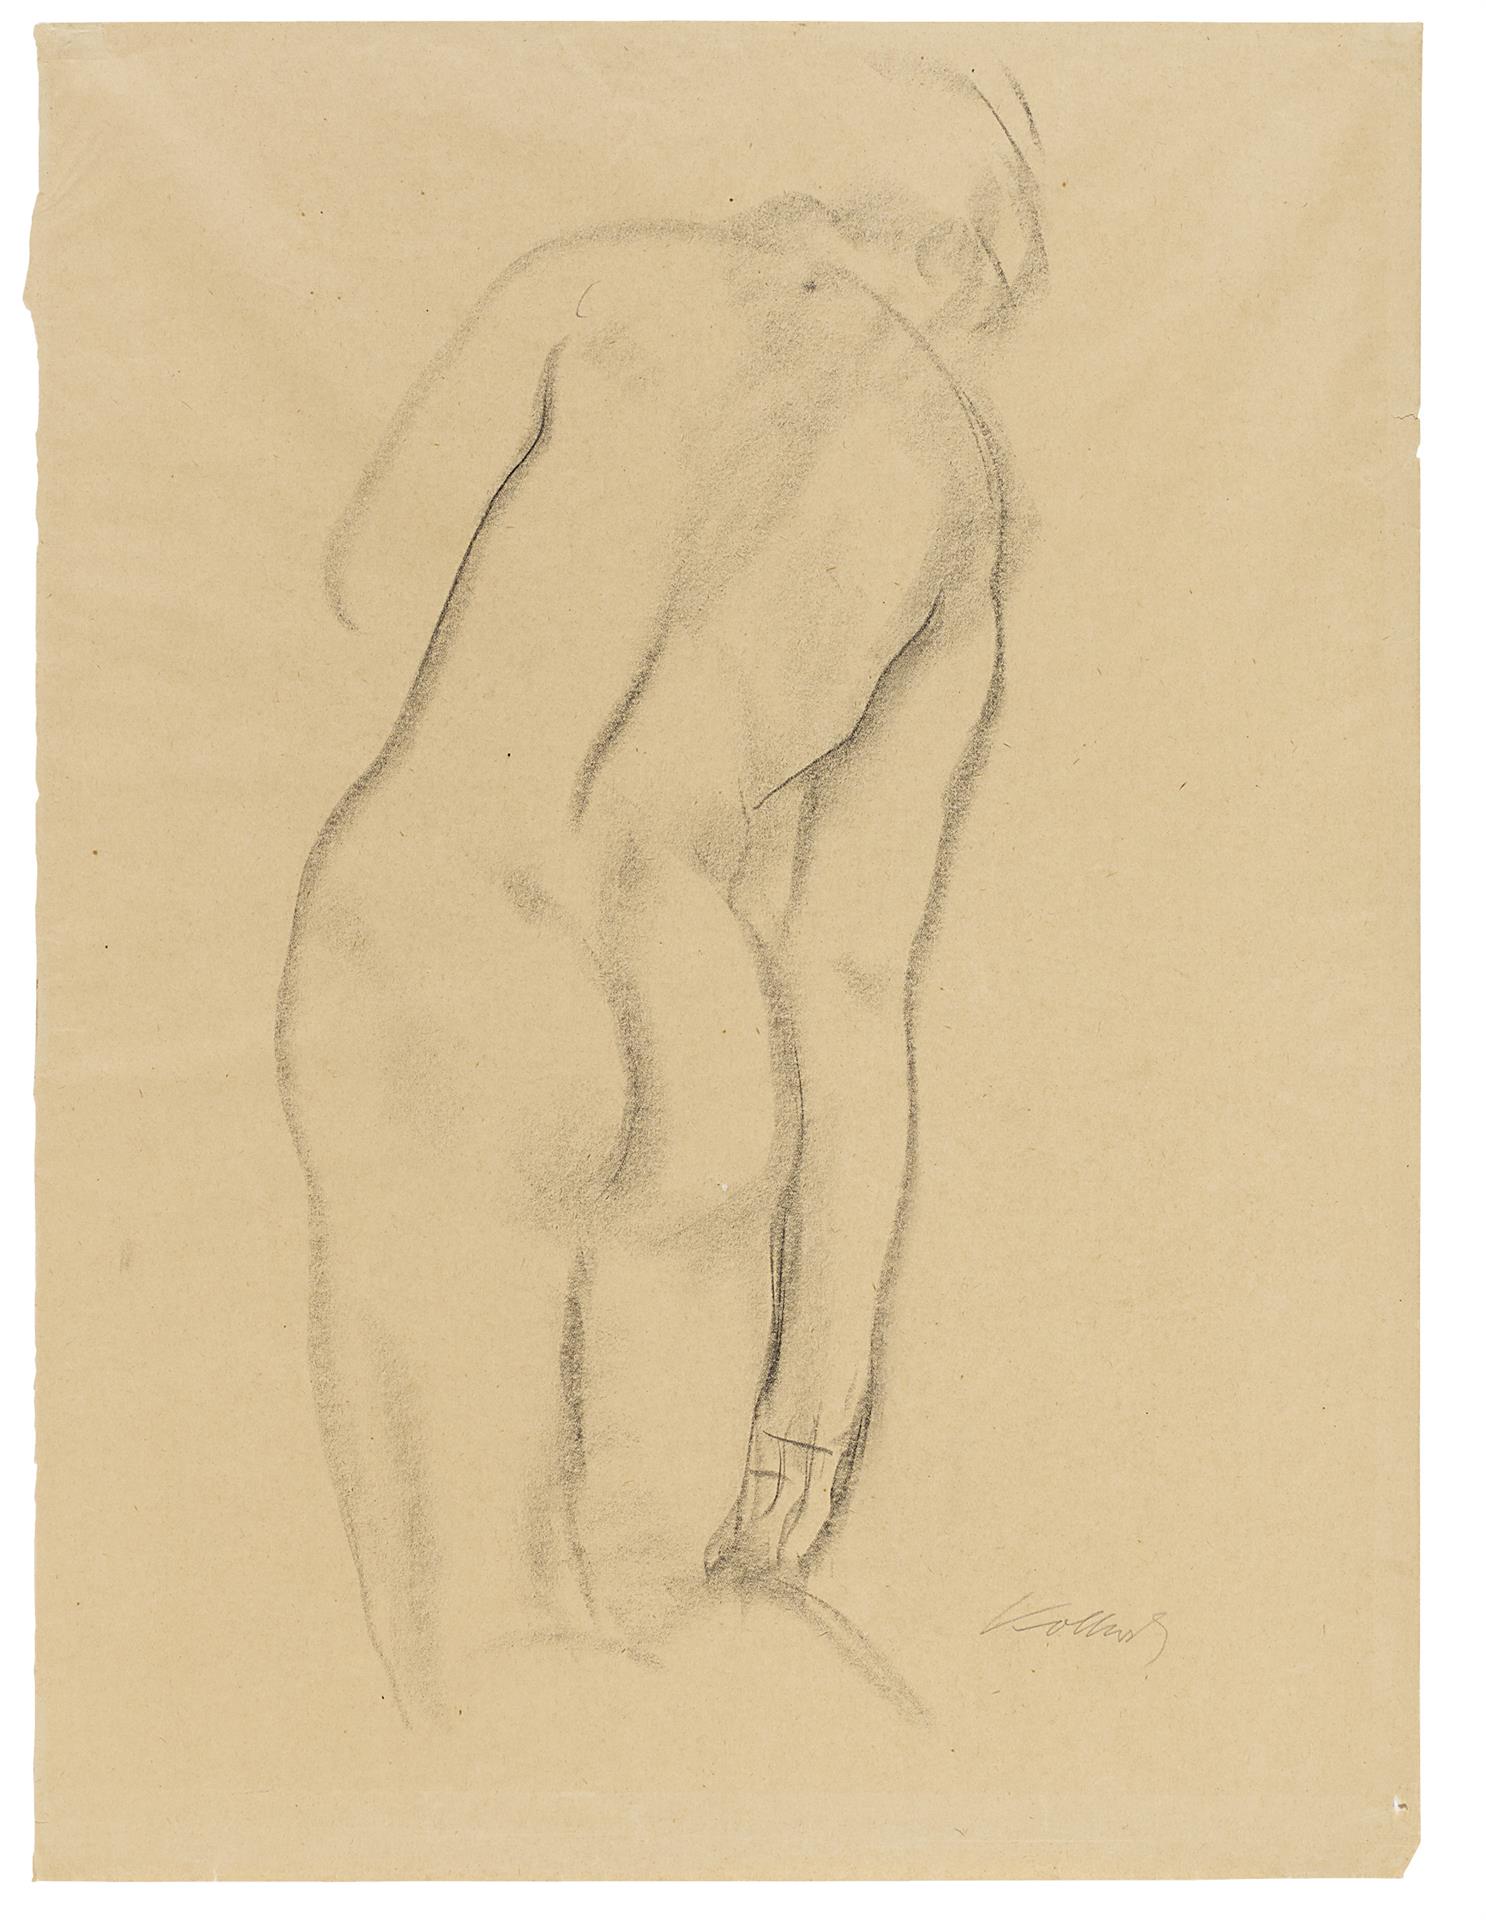 Käthe Kollwitz, Kniender weiblicher Rückenakt, 1904-06, Schwarze Kreide, NT 339 